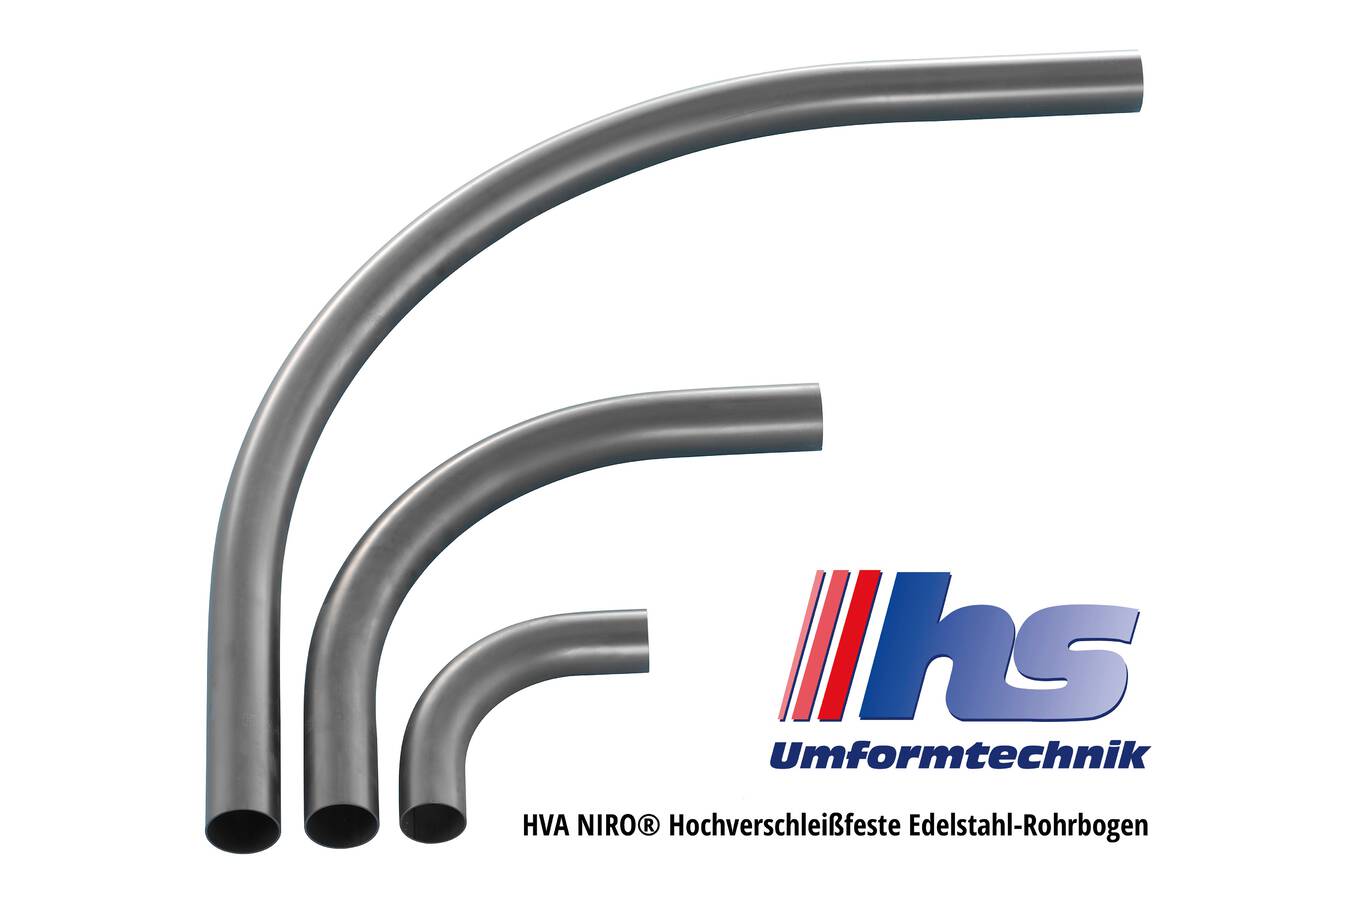 HVA NIRO® stainless steel pipe bends